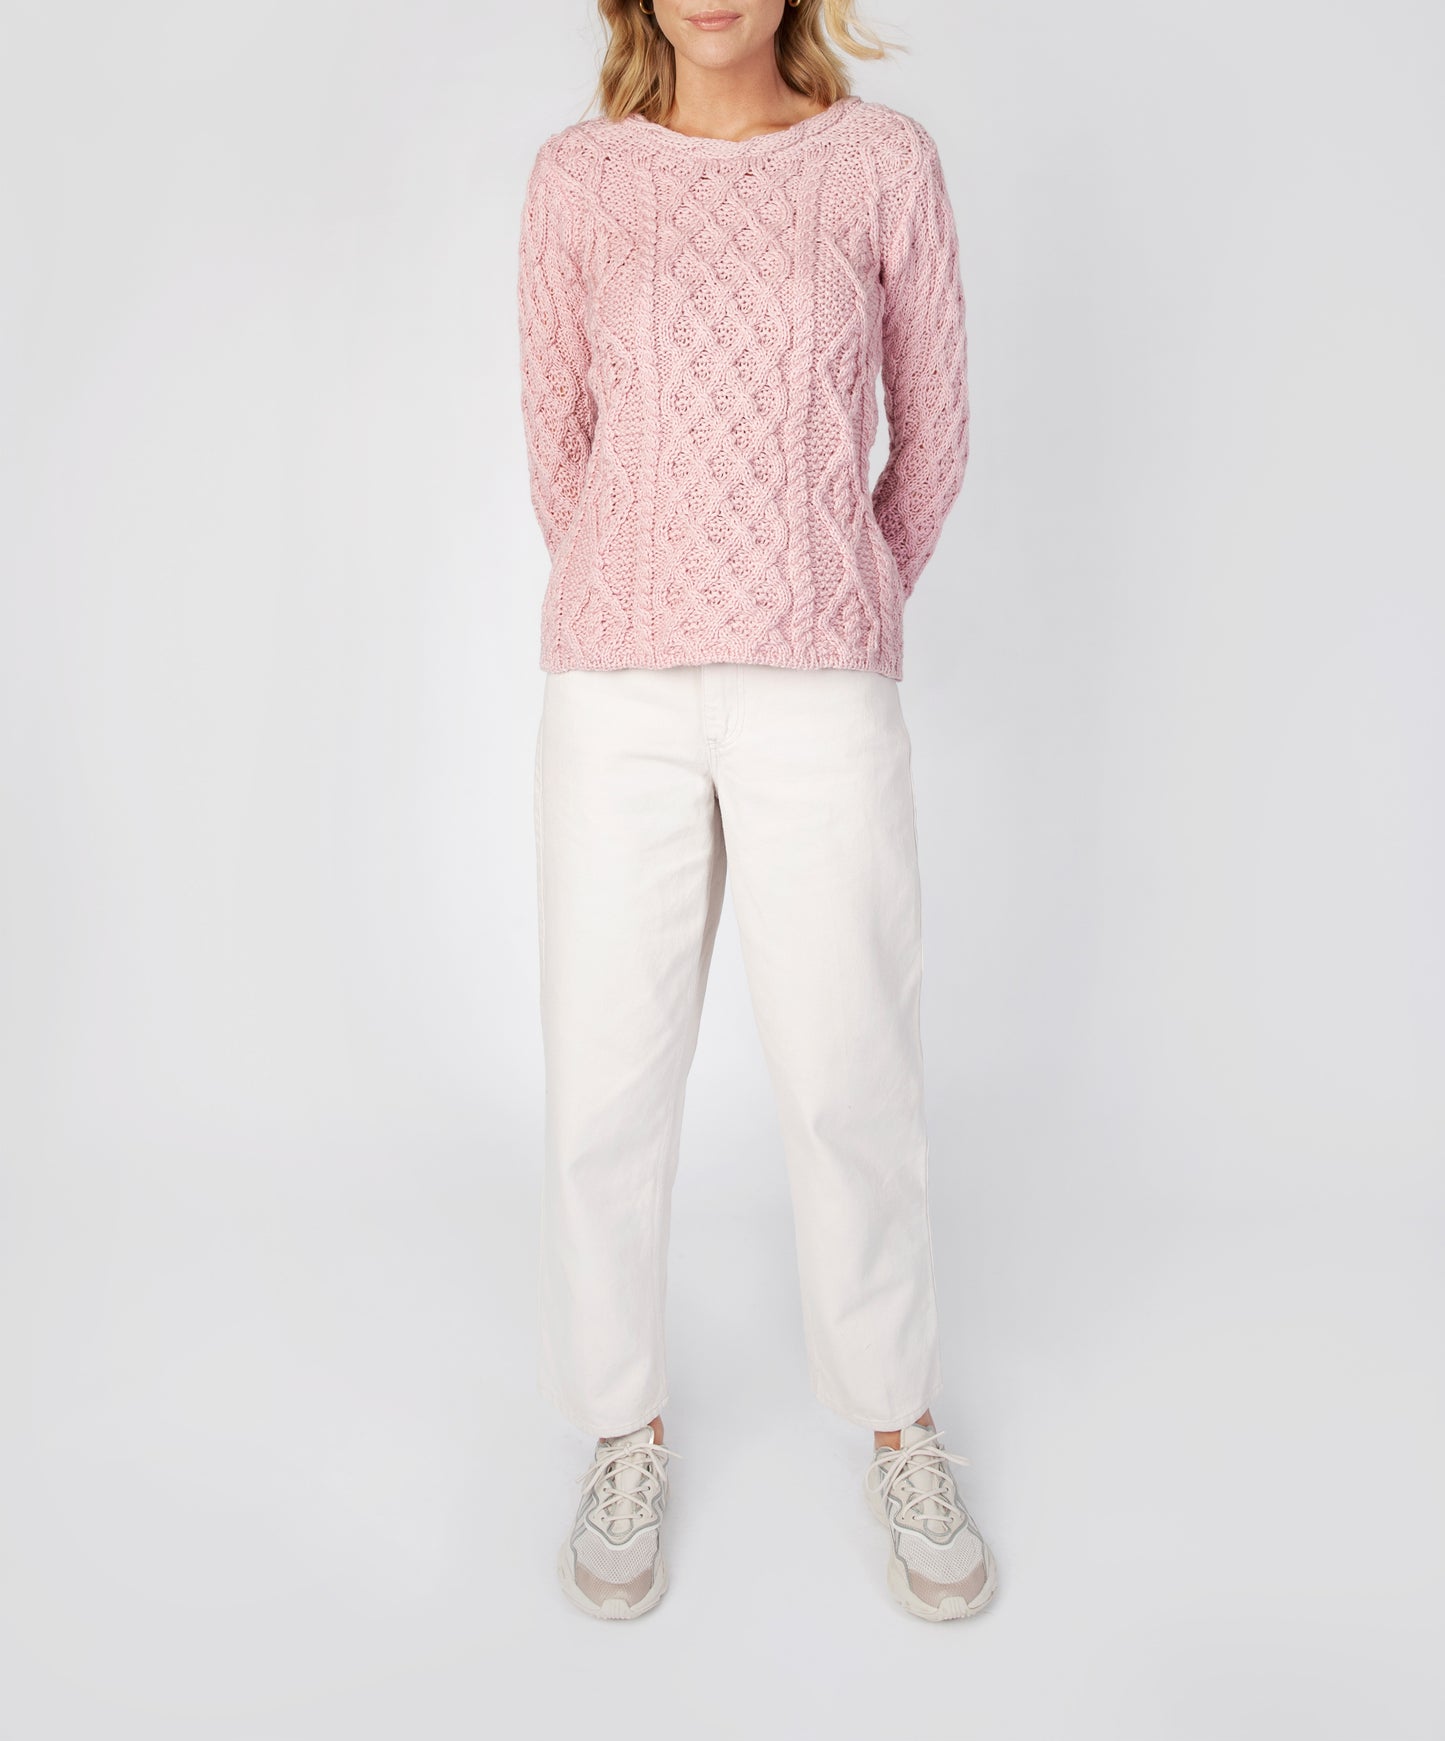 IrelandsEye Knitwear Lambay Lattice Cable Aran Sweater Pink Pale